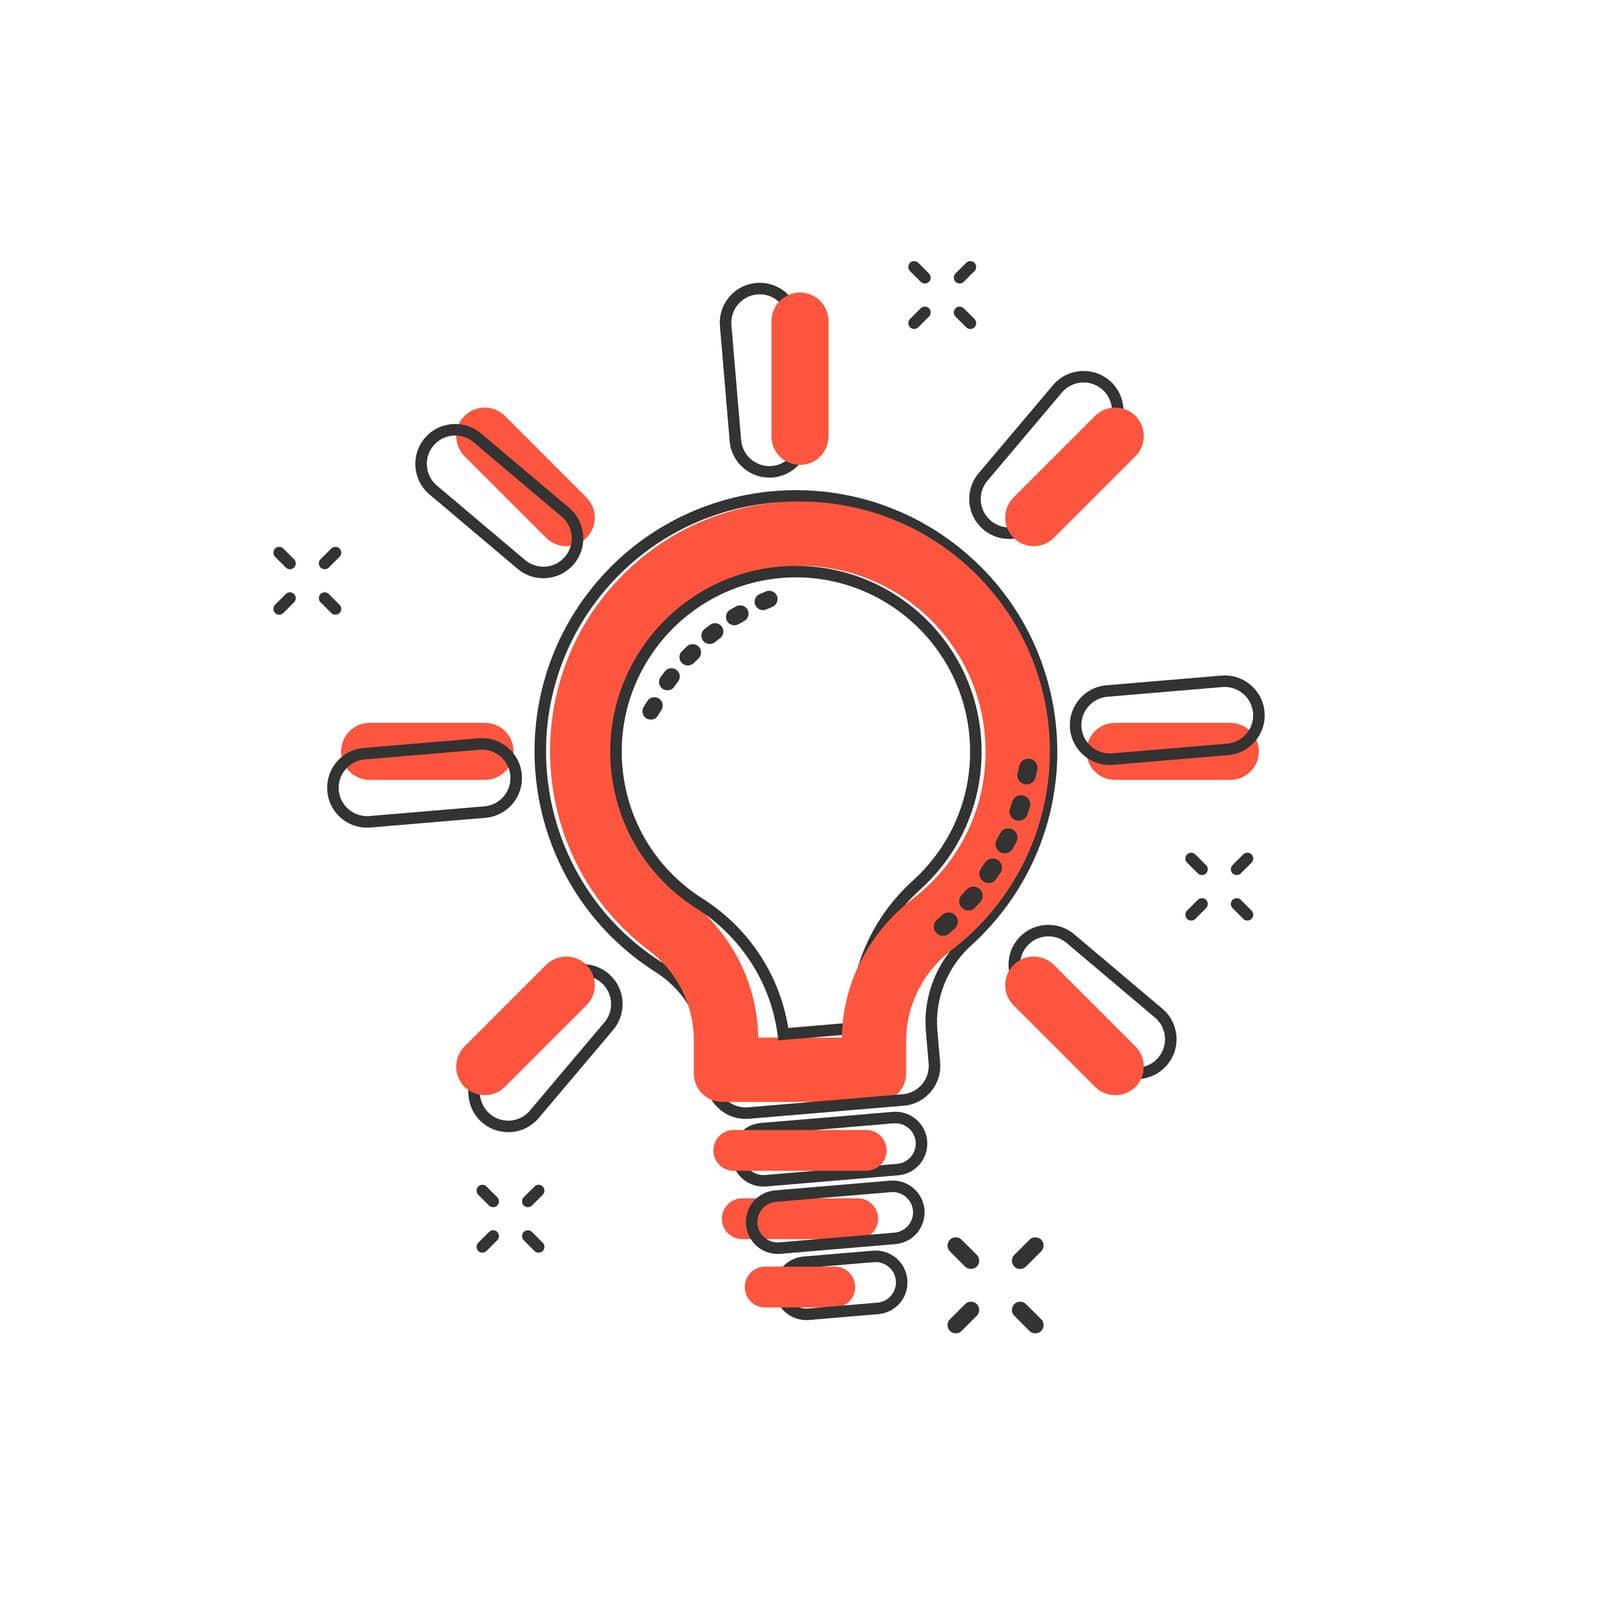 Vector cartoon light bulb icon in comic style. Electric lamp sign illustration pictogram. Idea lightbulb business splash effect concept.